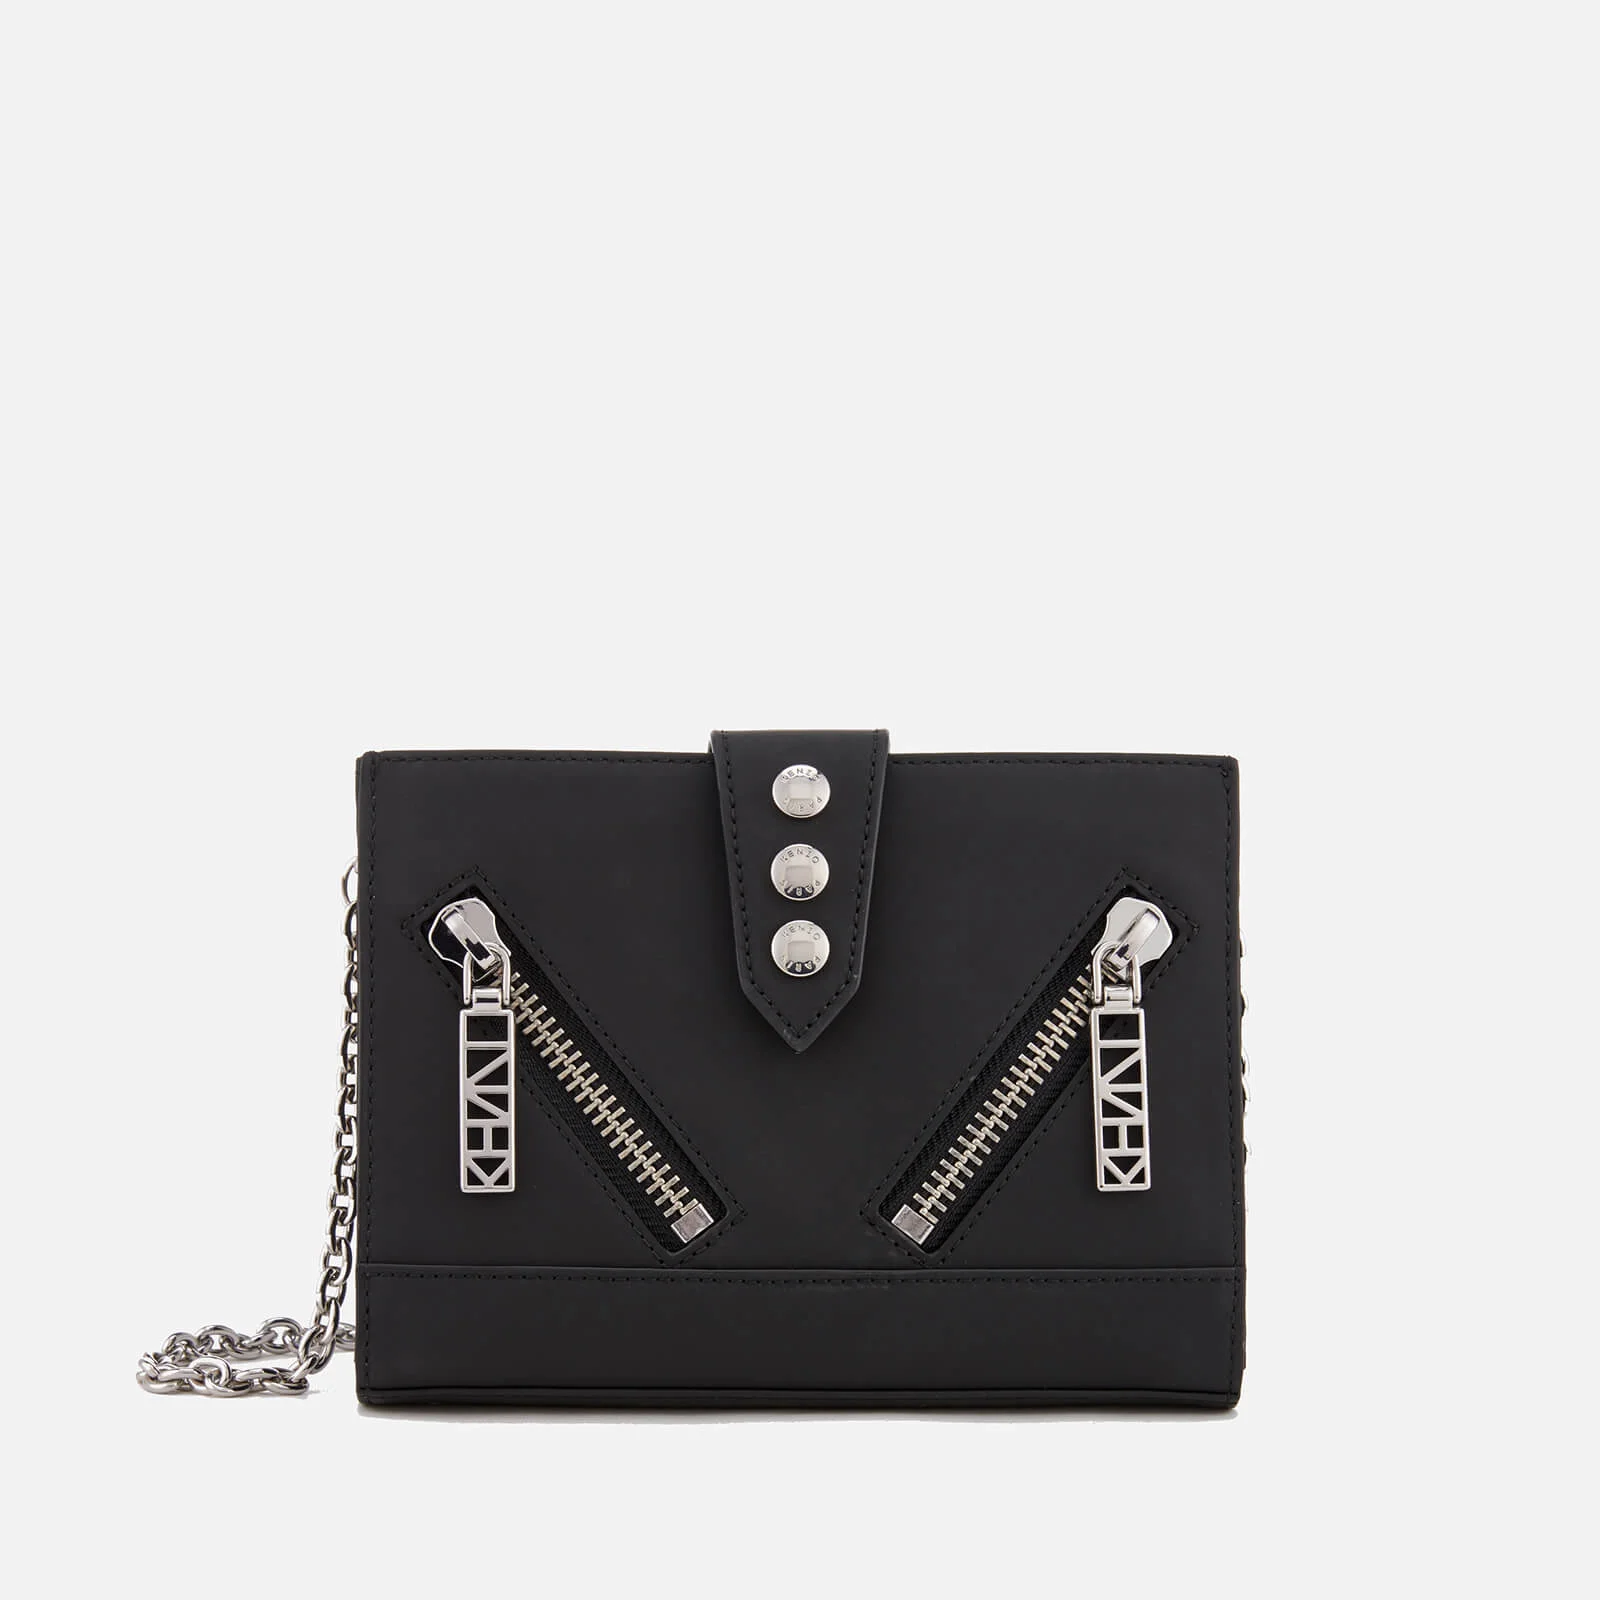 KENZO Women's Kalifornia Wallet on a Chain Crossbody Bag - Black Image 1